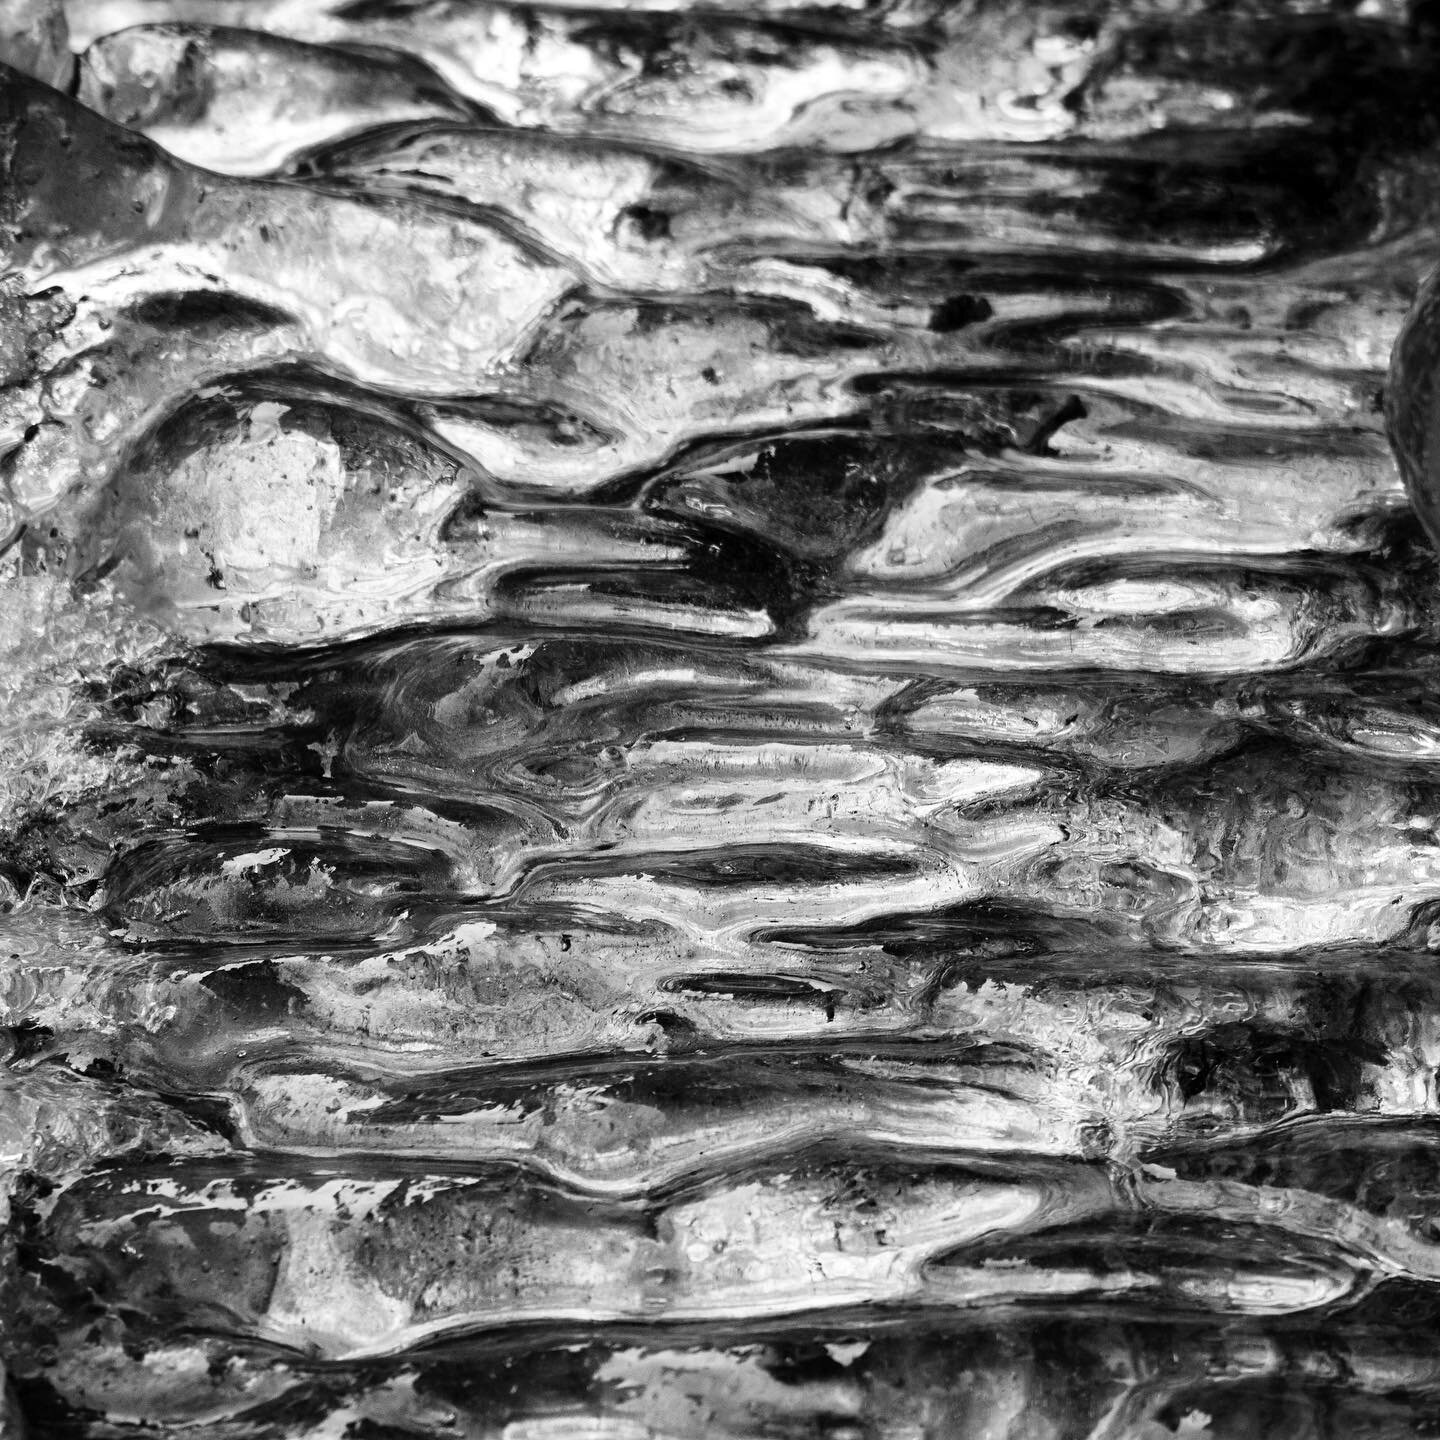 Liquid Metal
01.03.2020
Diana&rsquo;s Baths
Bartlett, New Hampshire 

#ice #blackandwhite #macro #macrophotography #water #explore #photography #snow #winter #newhampshire #conway #frozen #nh #nature #abstractart #natureza #aventureiros #canon #liqui